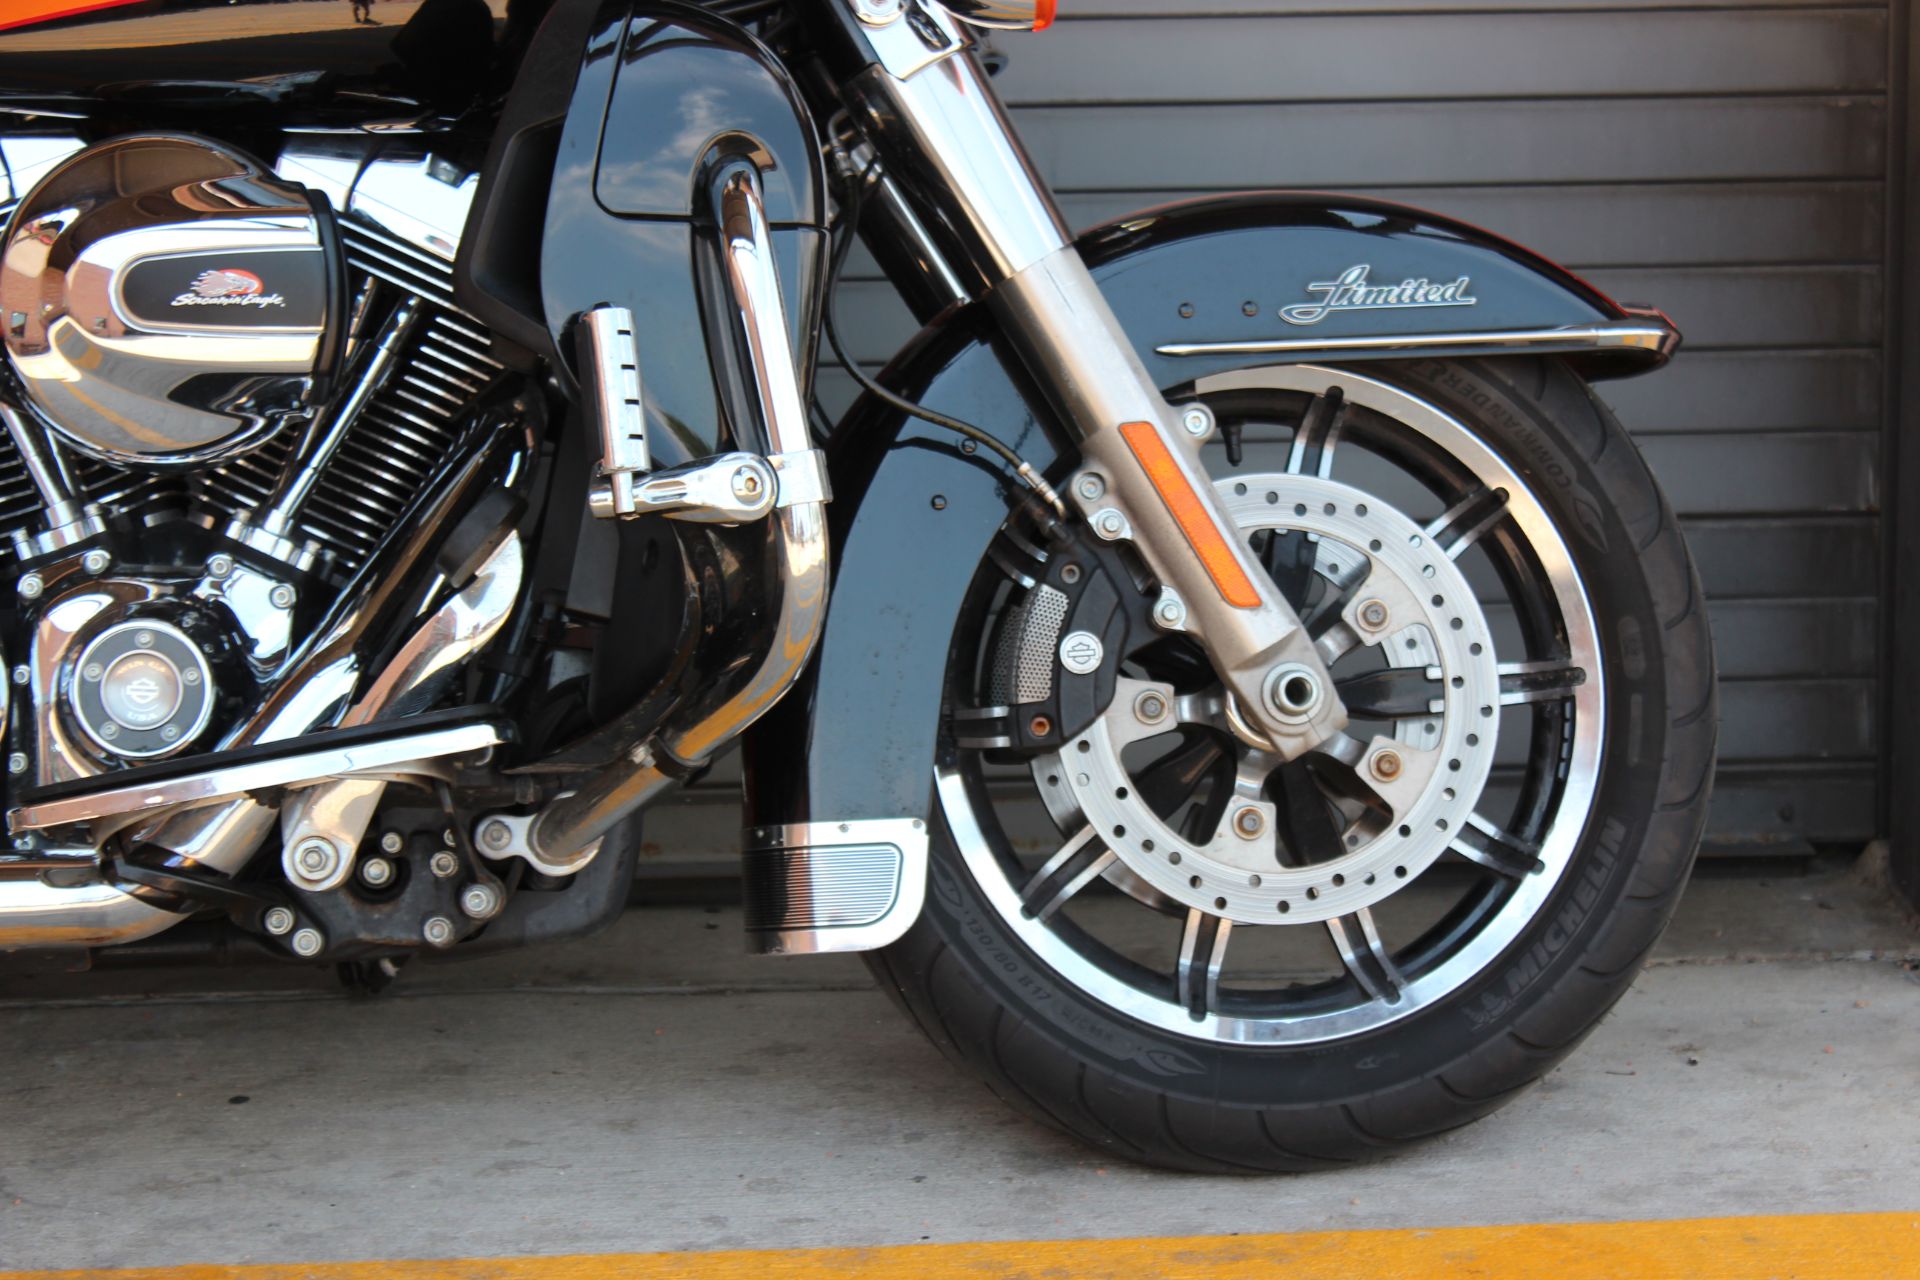 2014 Harley-Davidson Ultra Limited in Carrollton, Texas - Photo 4